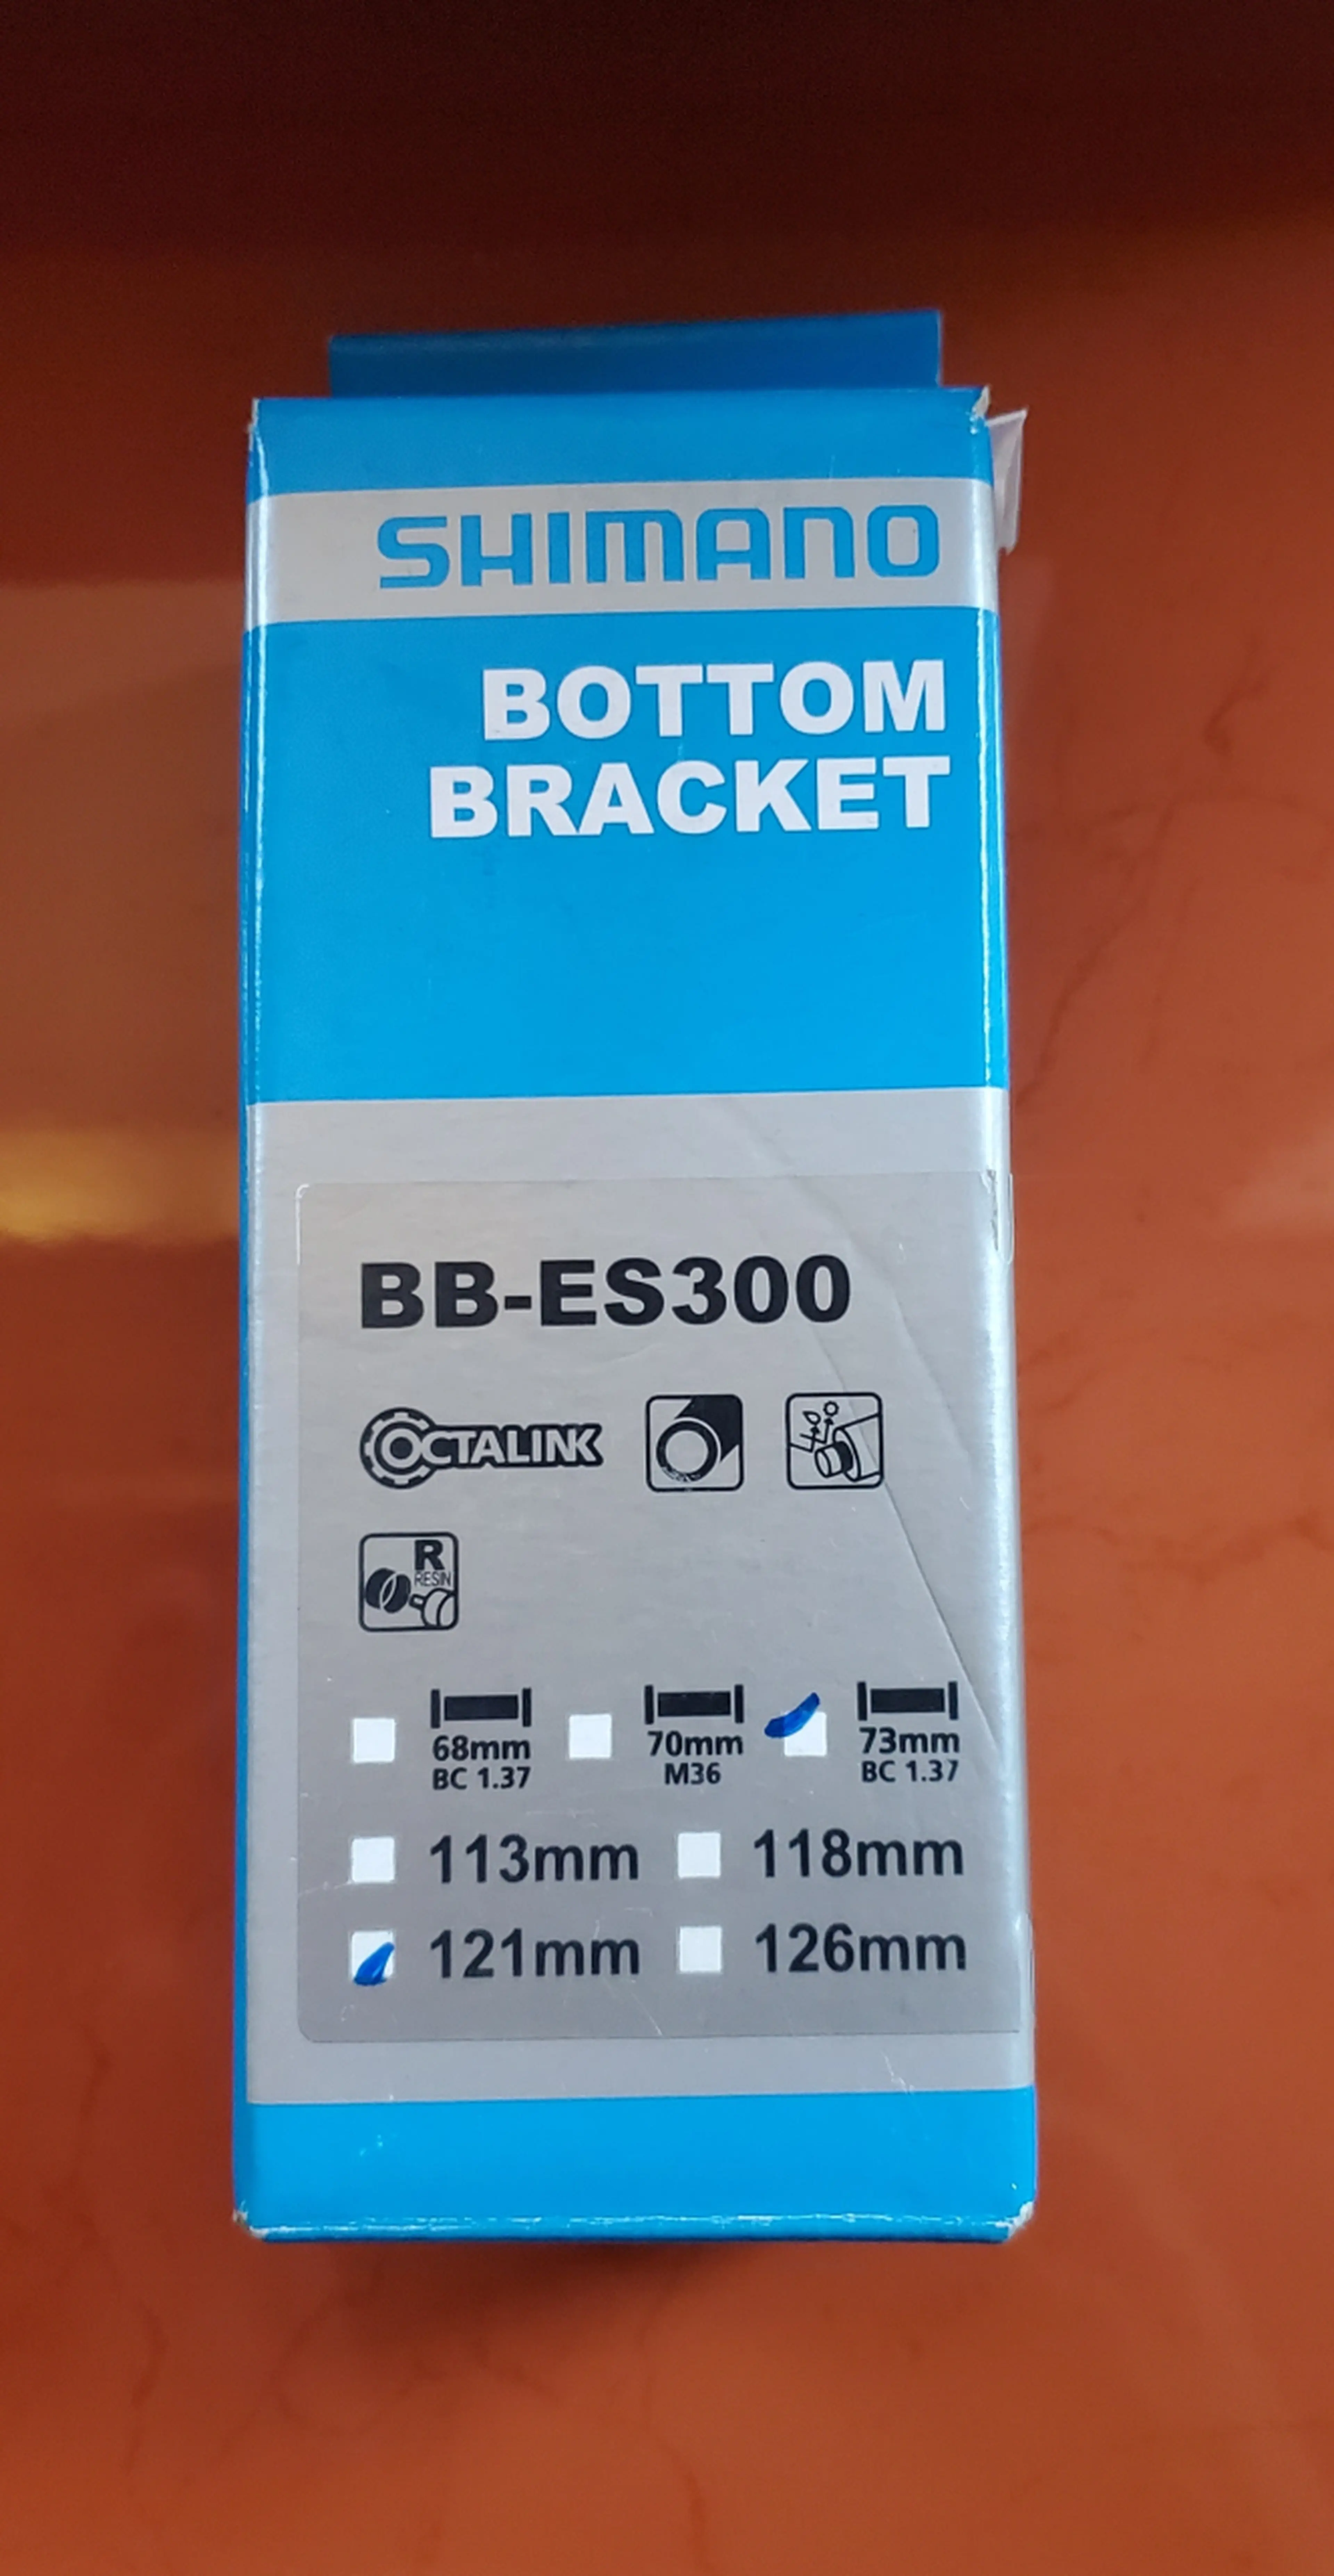 1. Butuc pedalier Shimano BB-ES300 73-121 mm octalink/hollowtech